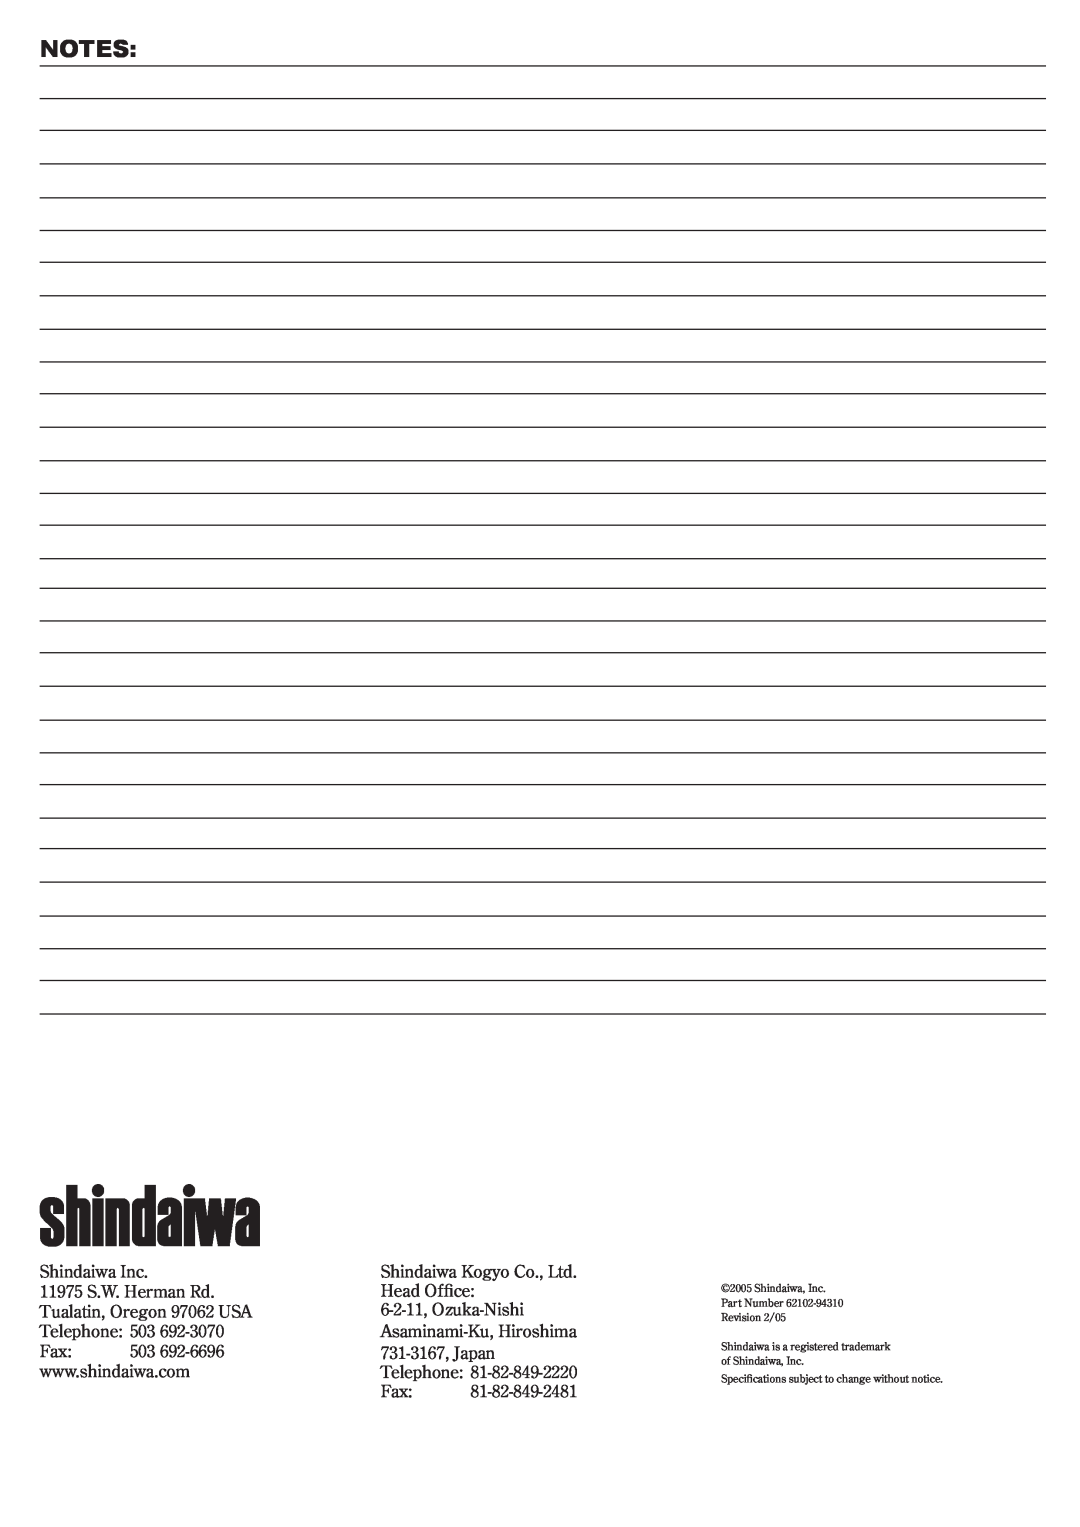 Symbol Technologies B450 Shindaiwa, Inc Part Number Revision 2/05, Shindaiwa is a registered trademark of Shindaiwa, Inc 